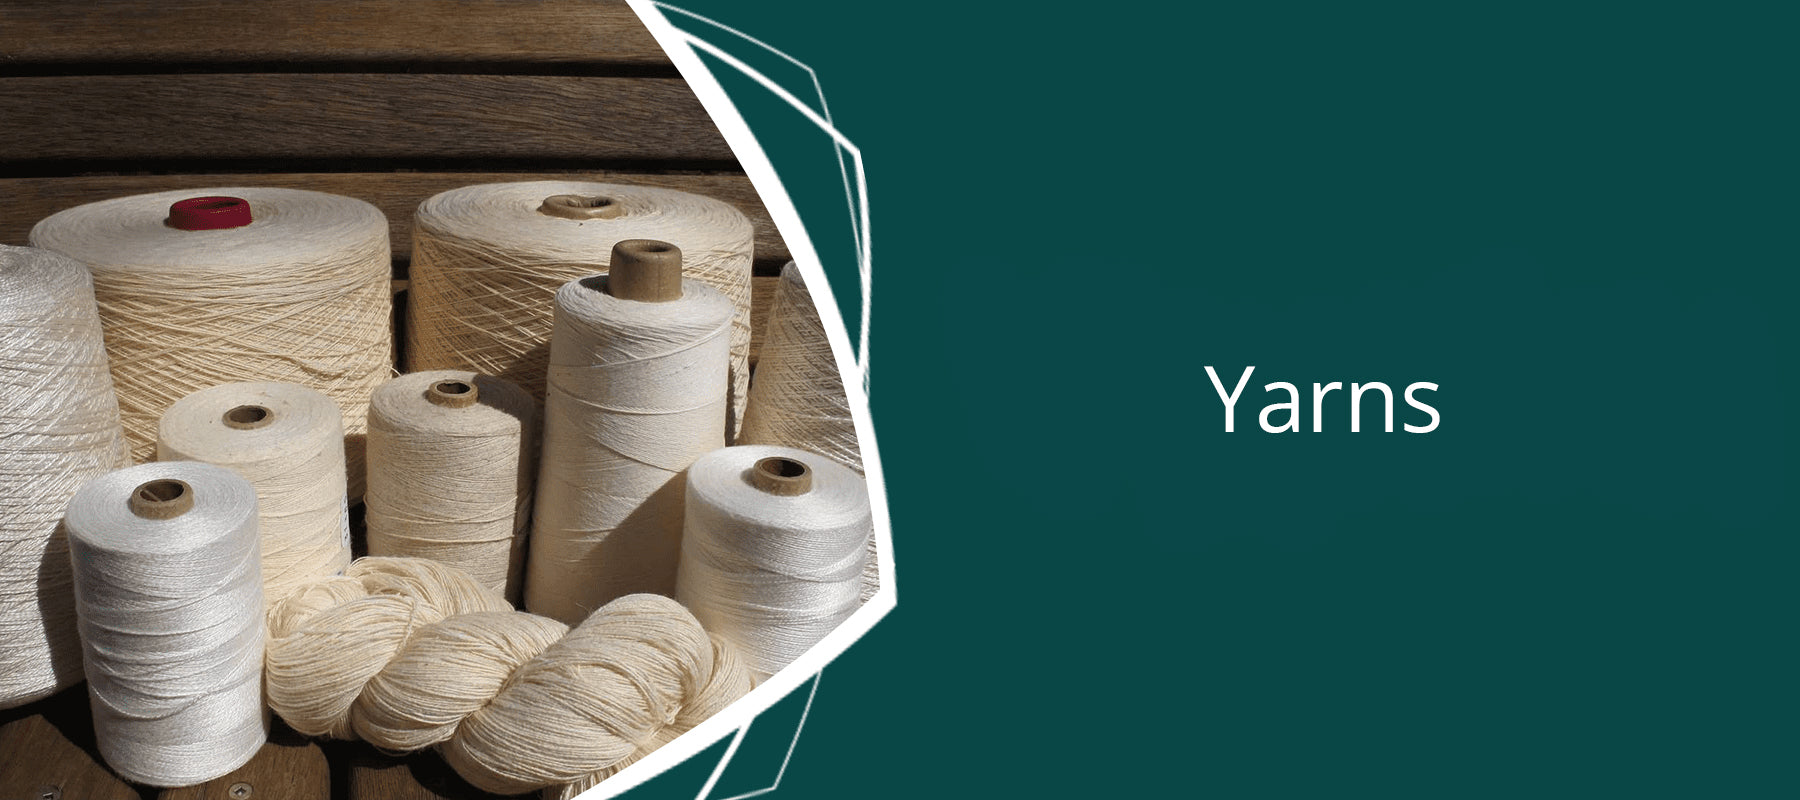 Yarn Australia: Weaving, Knitting & Speciality Yarns - Thread Collective Australia 